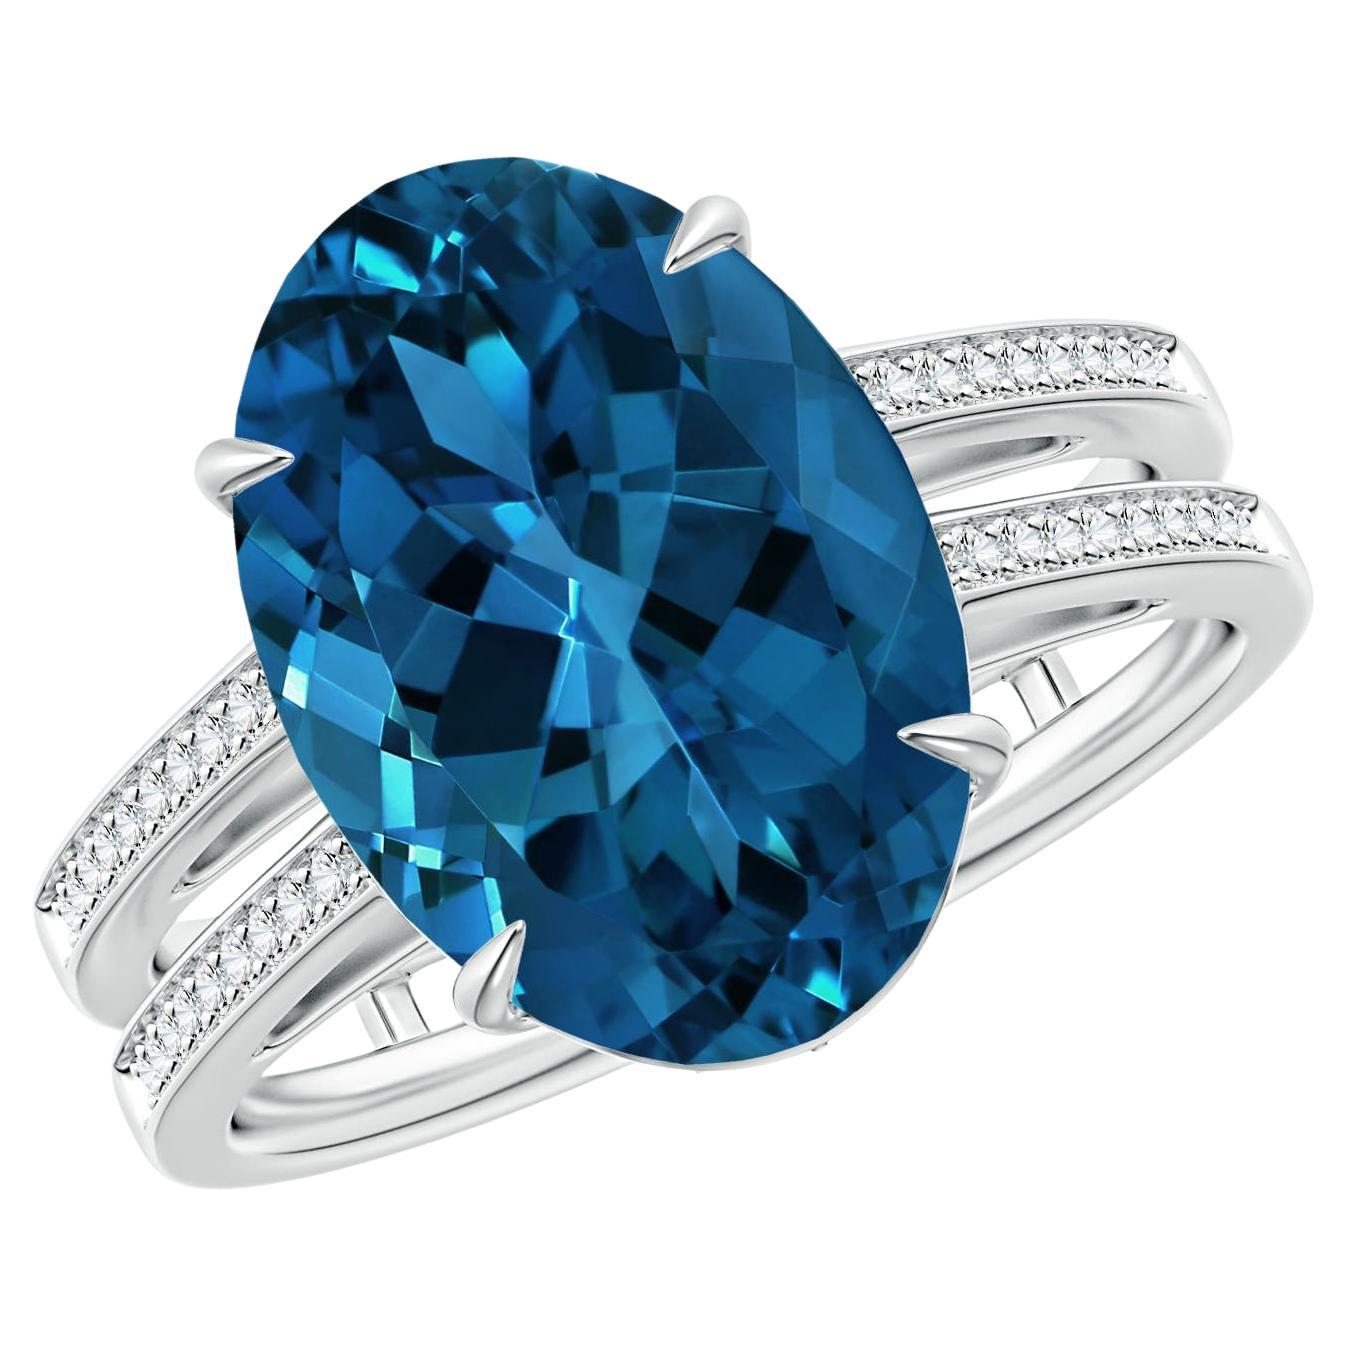 ANGARA GIA Certified Natural London Blue Topaz Engagement Ring in Platinum